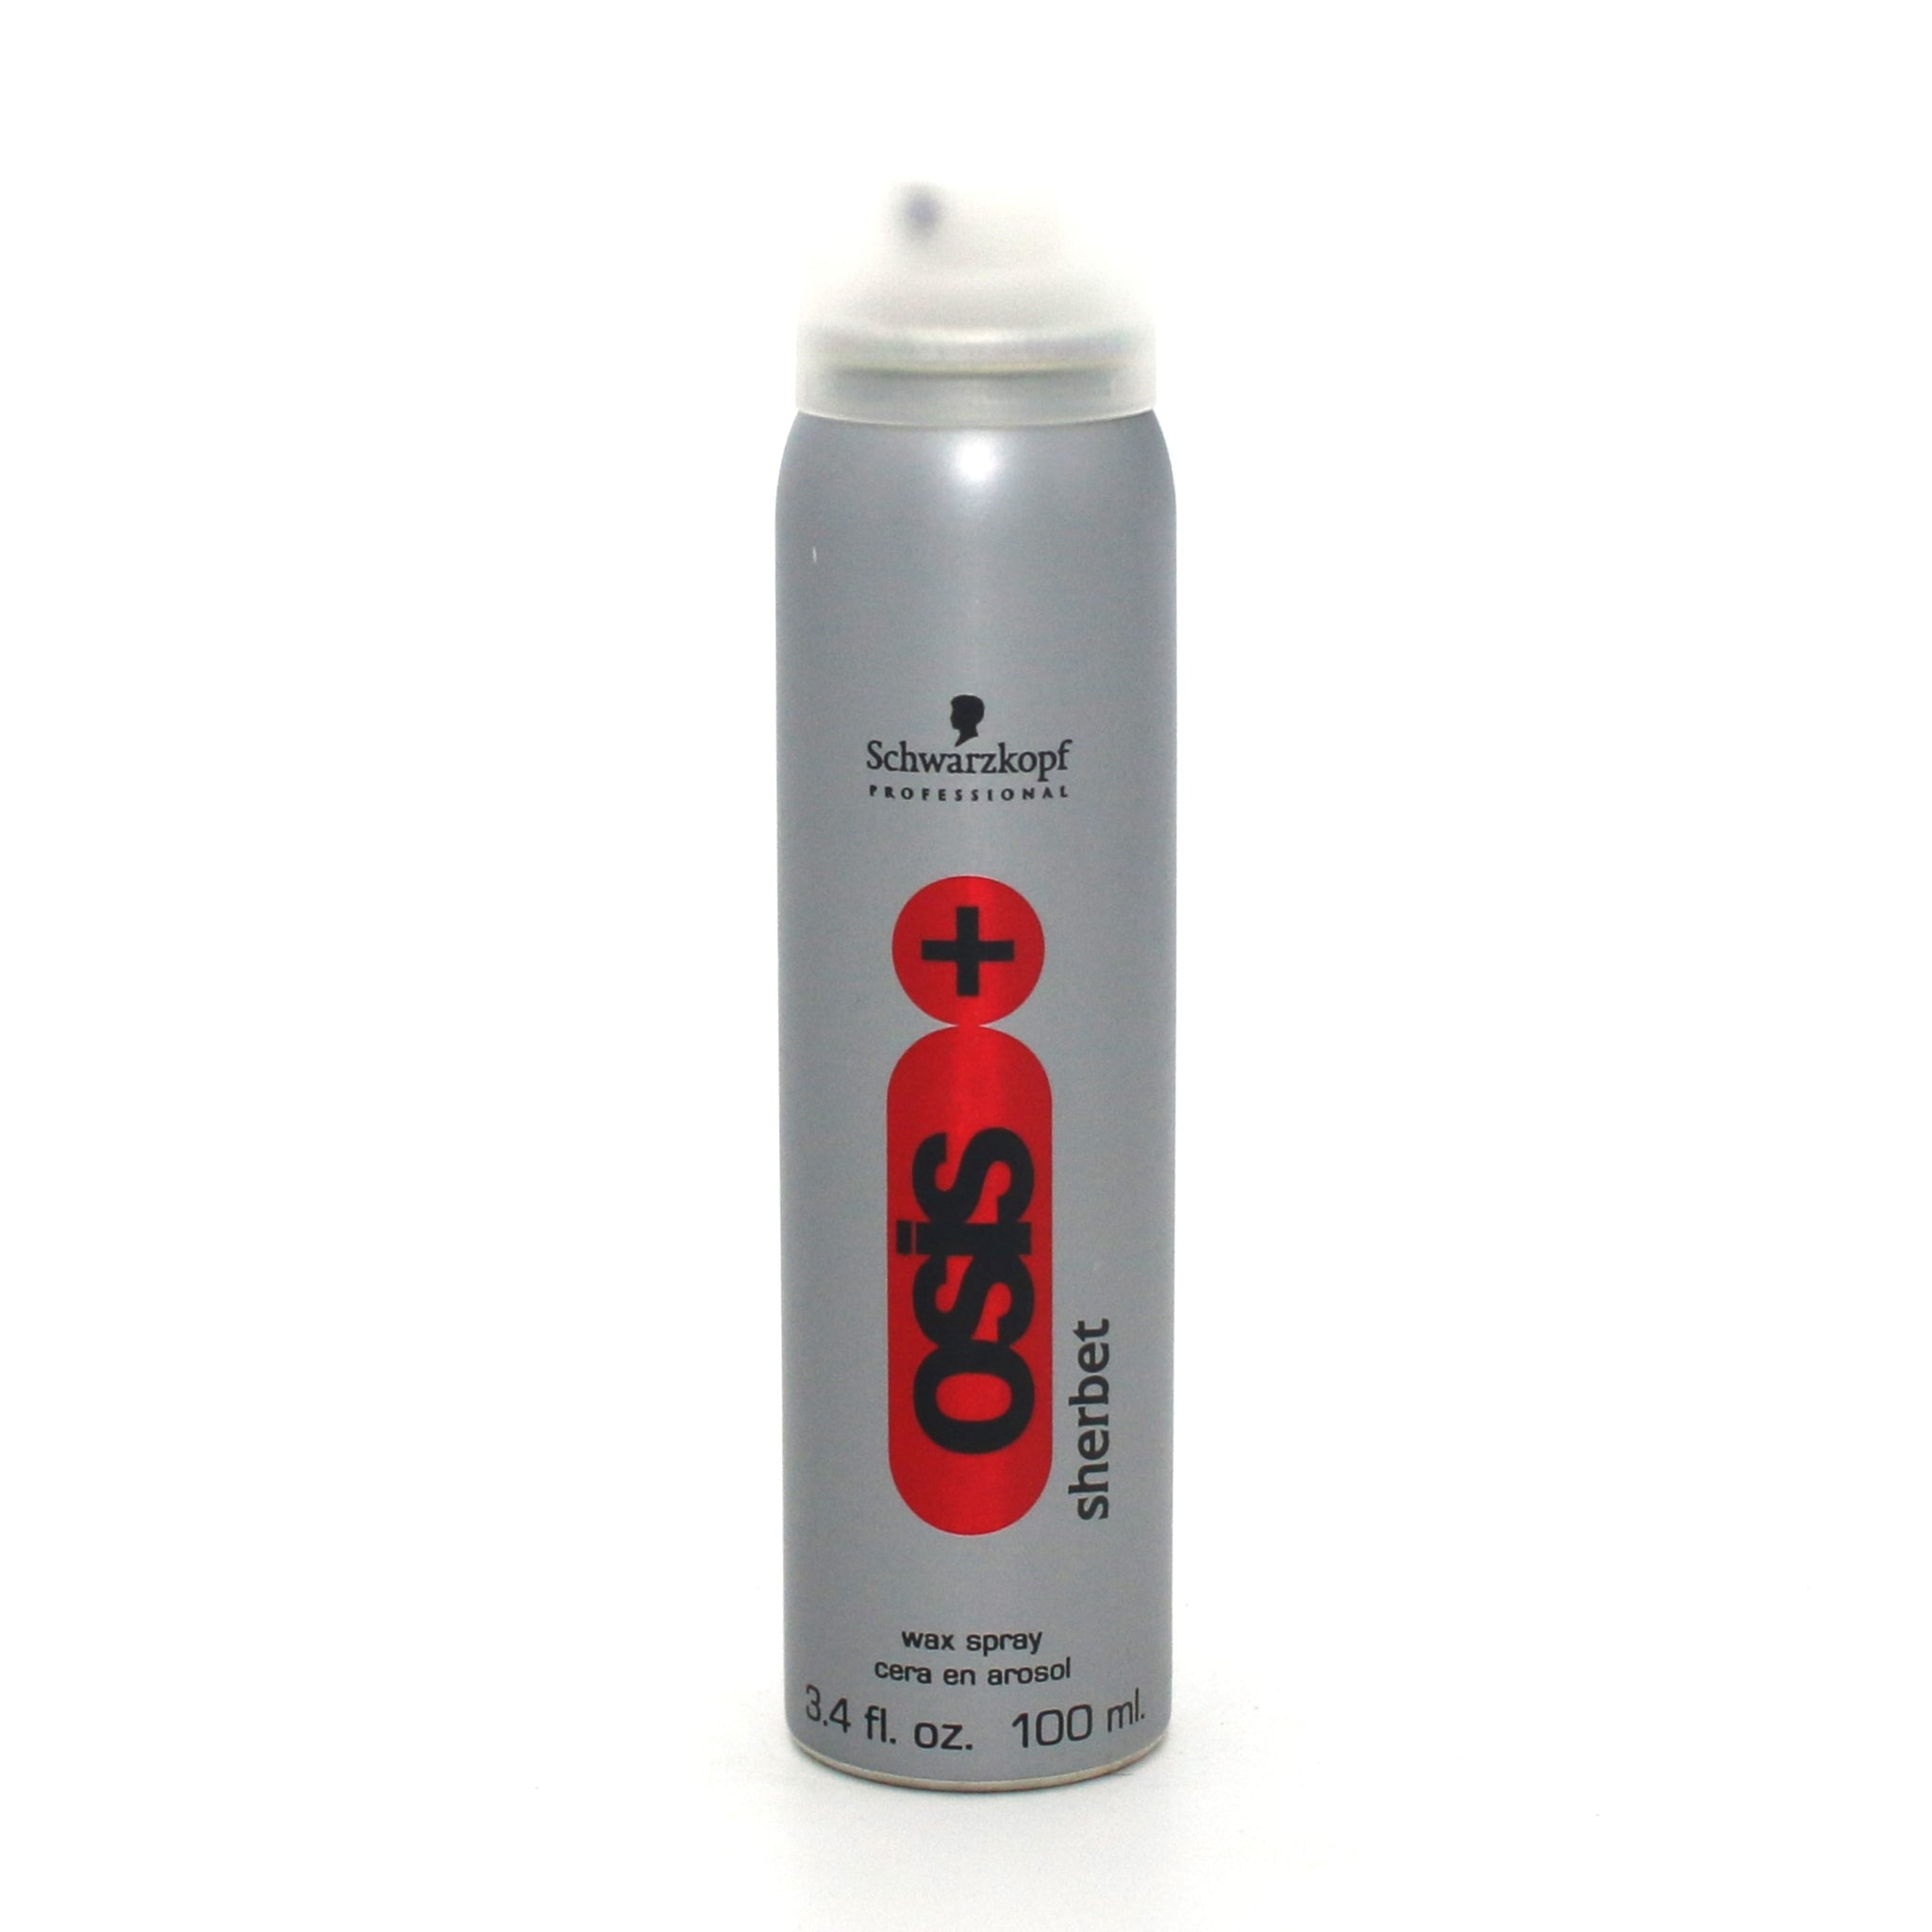 Schwarzkopf Osis+ Sherbert Wax Spray 3.4 oz